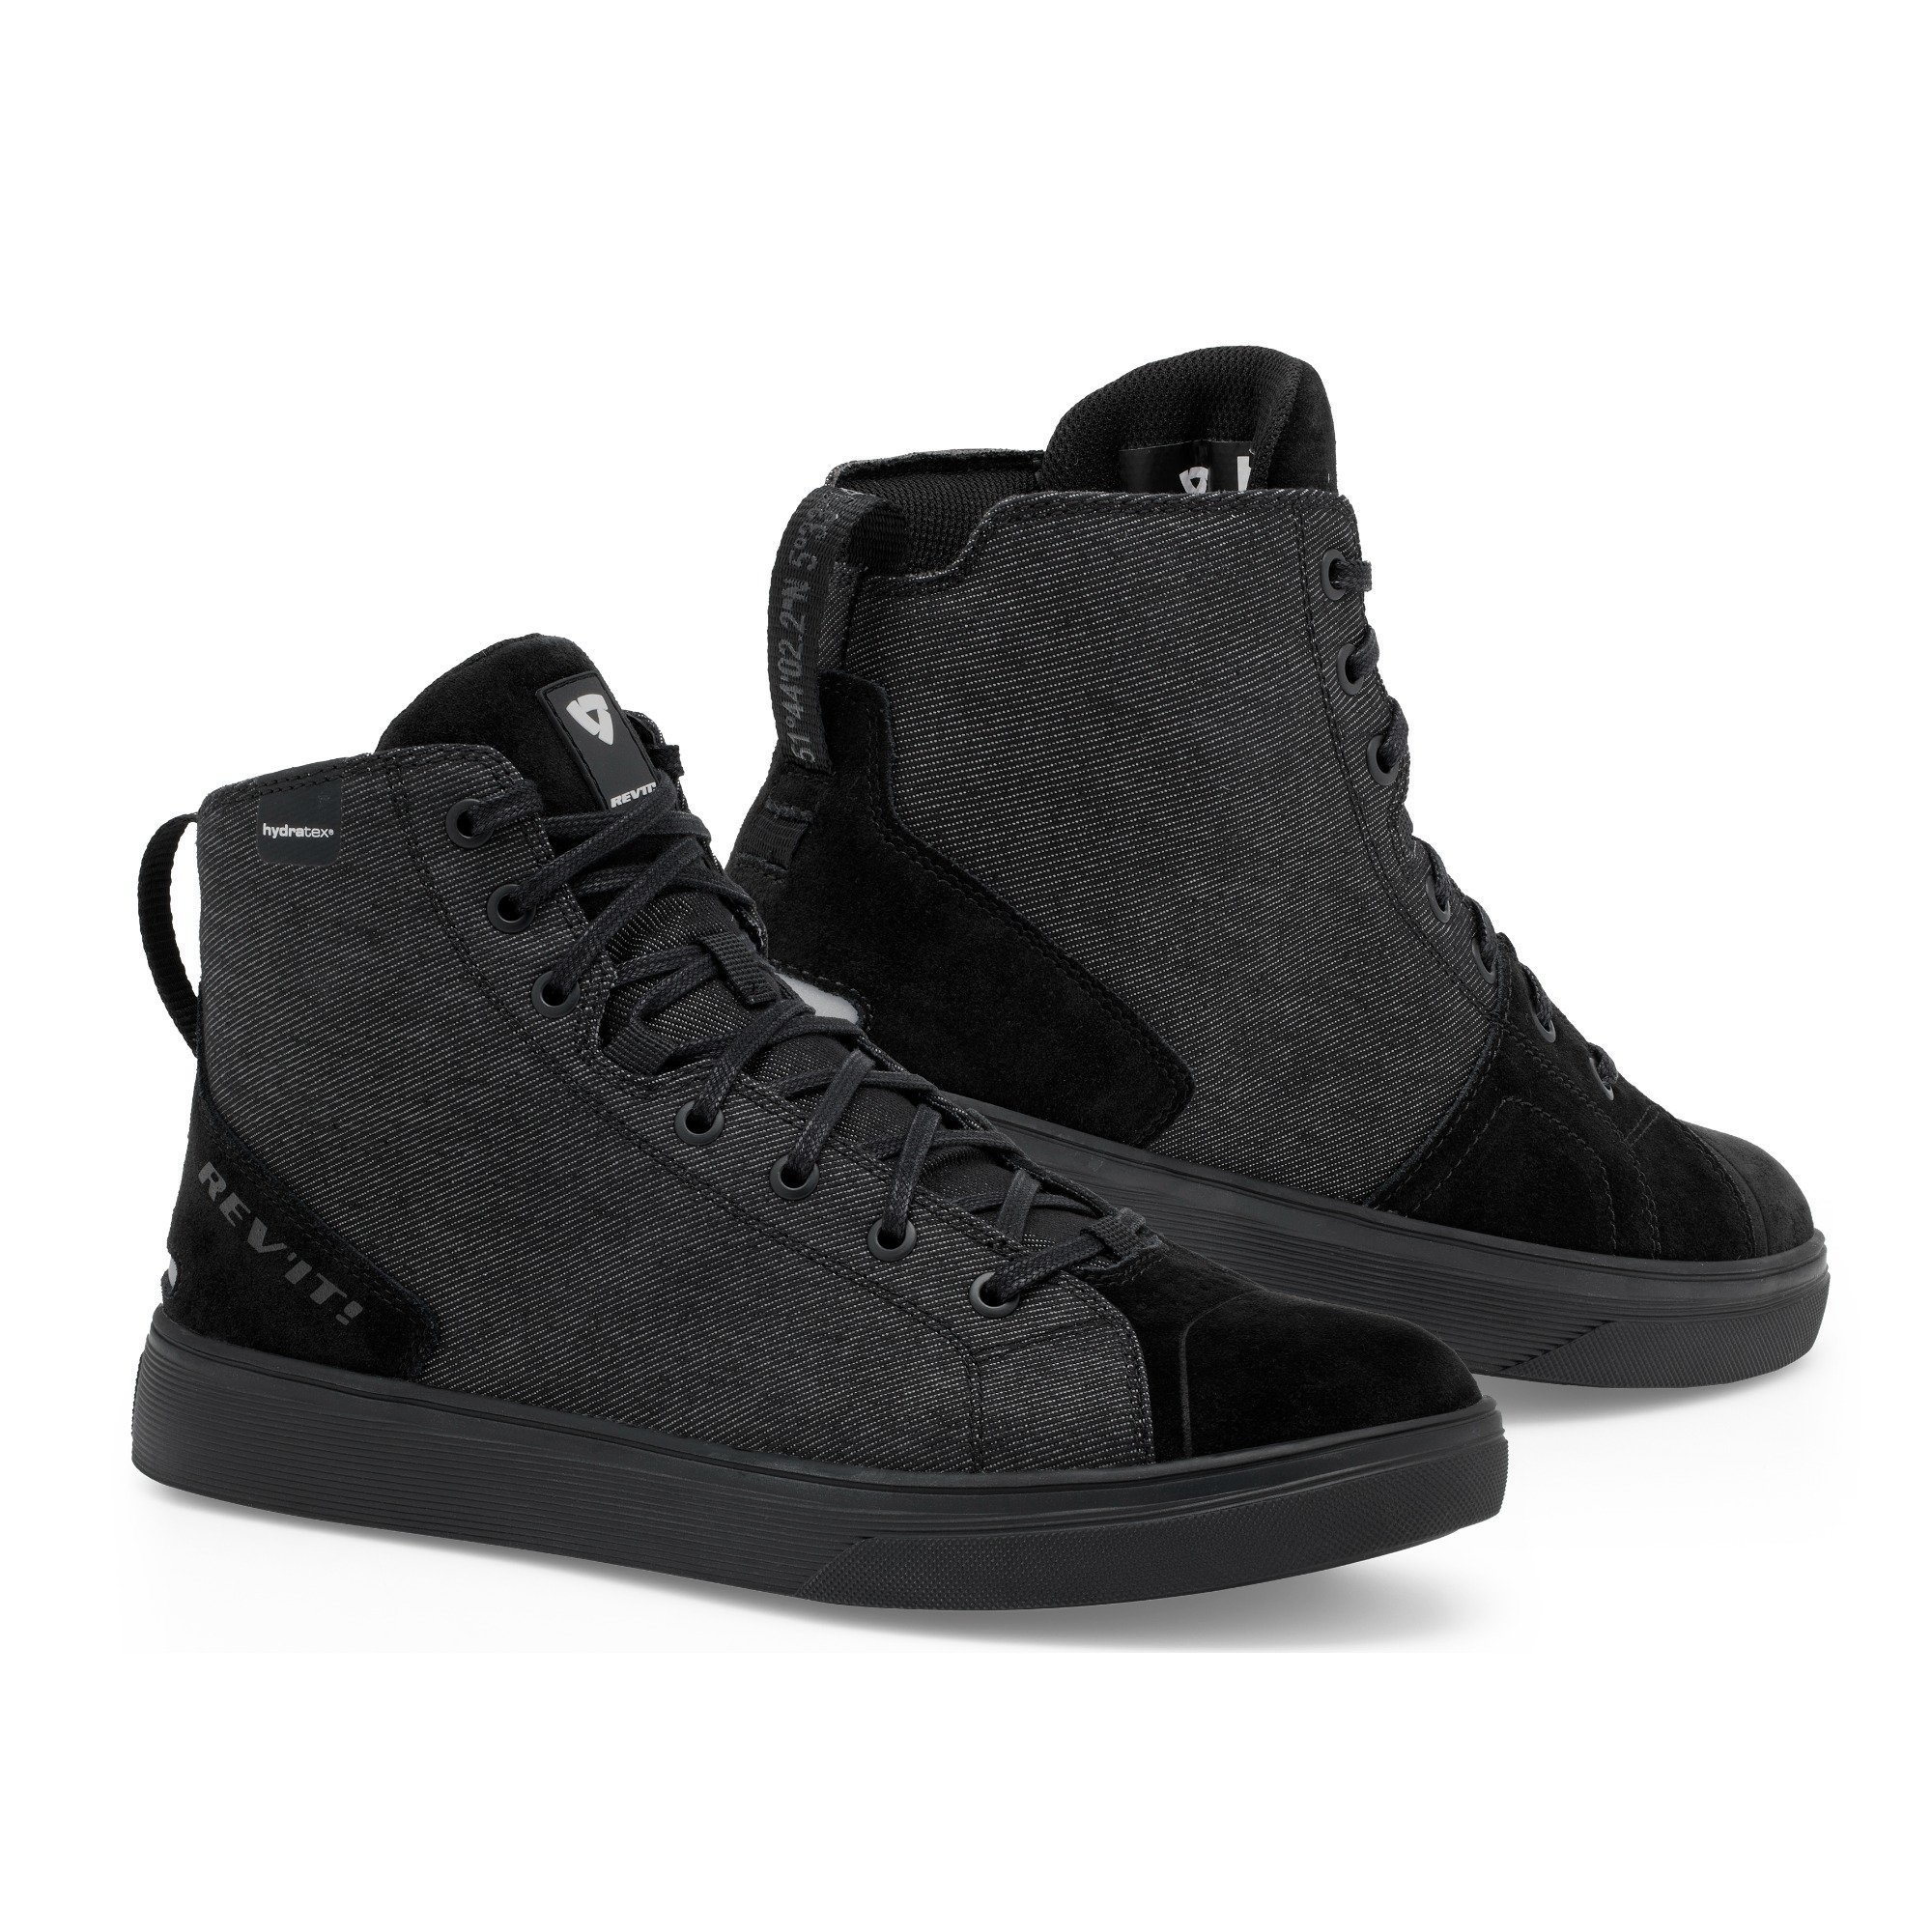 Image of REV'IT! Delta H2O Shoes Black Size 43 EN